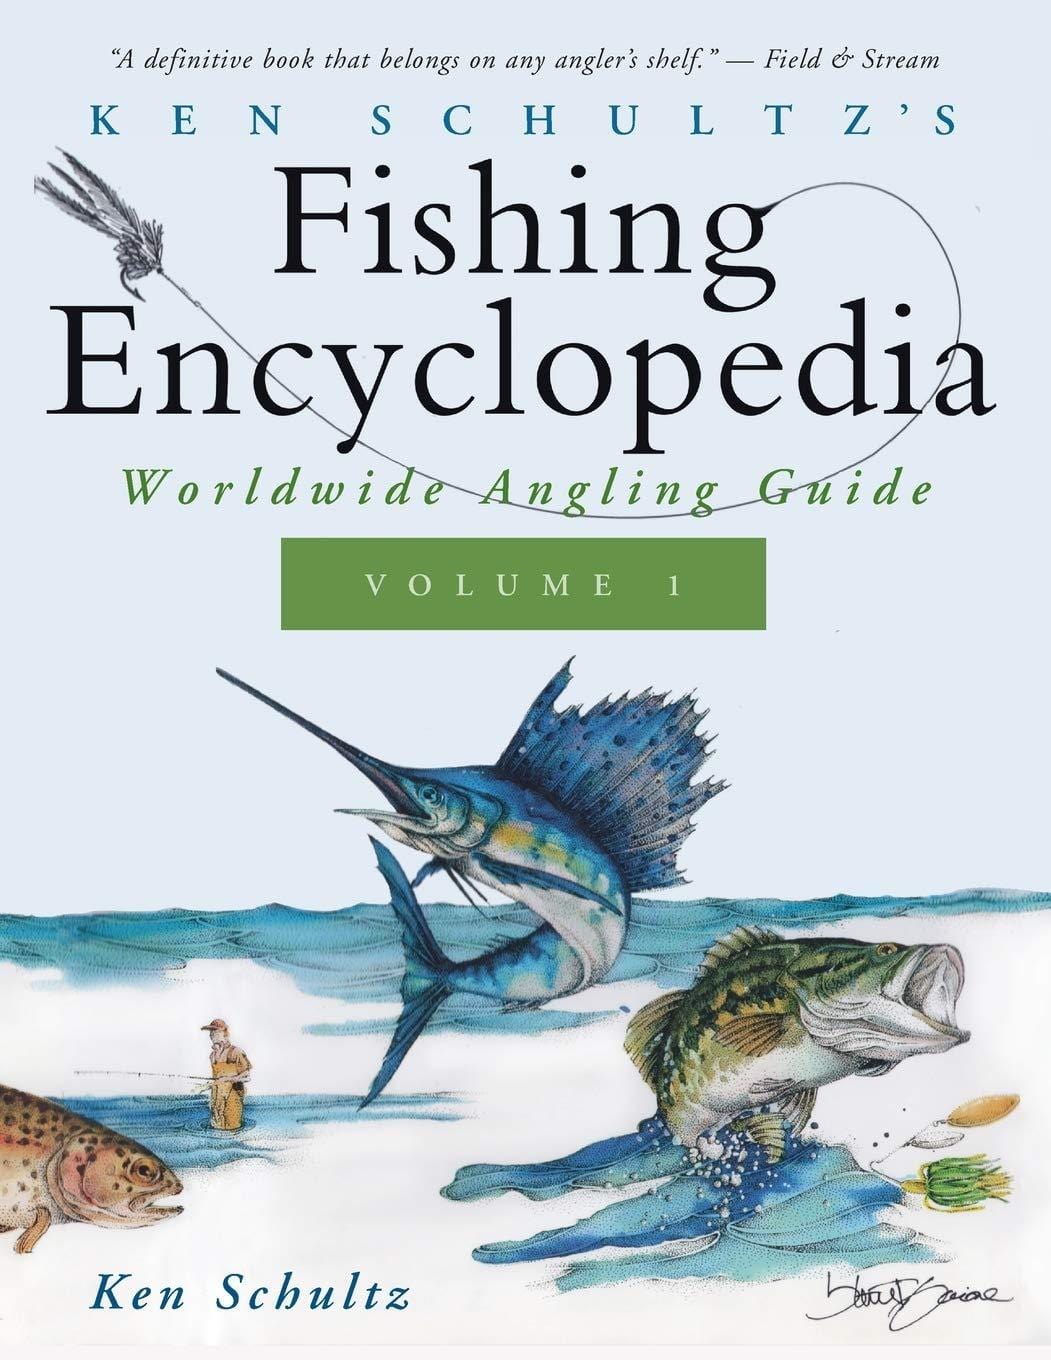 Ken Schultz's Fishing Encyclopedia Volume 1: Worldwide Angling Guide [Book]